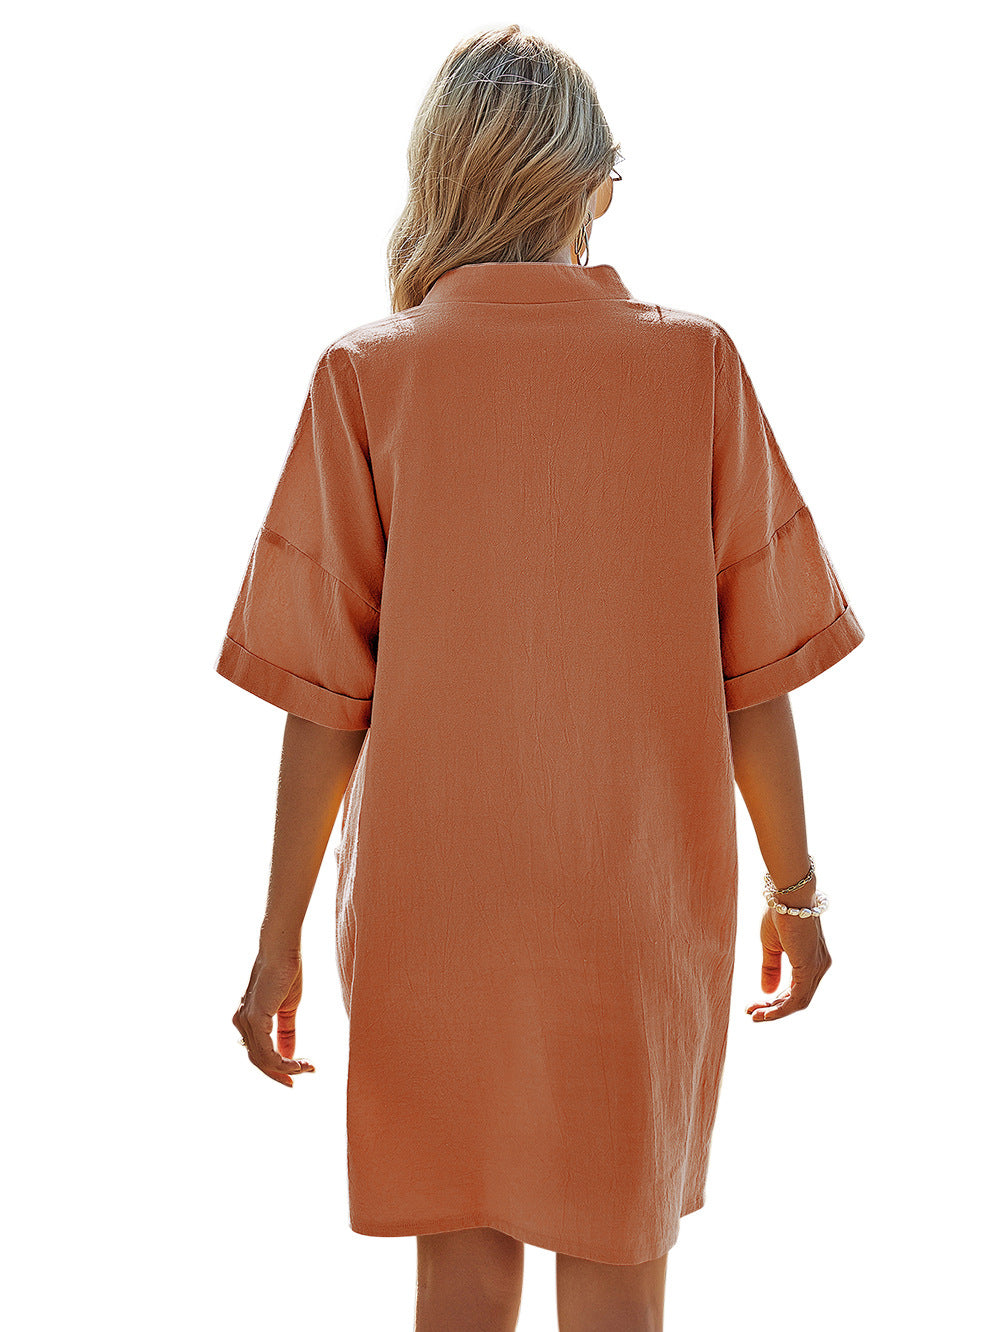 Casaul Short Sleeves Pocket Short Sleeves-Mini Dresses-Free Shipping at meselling99